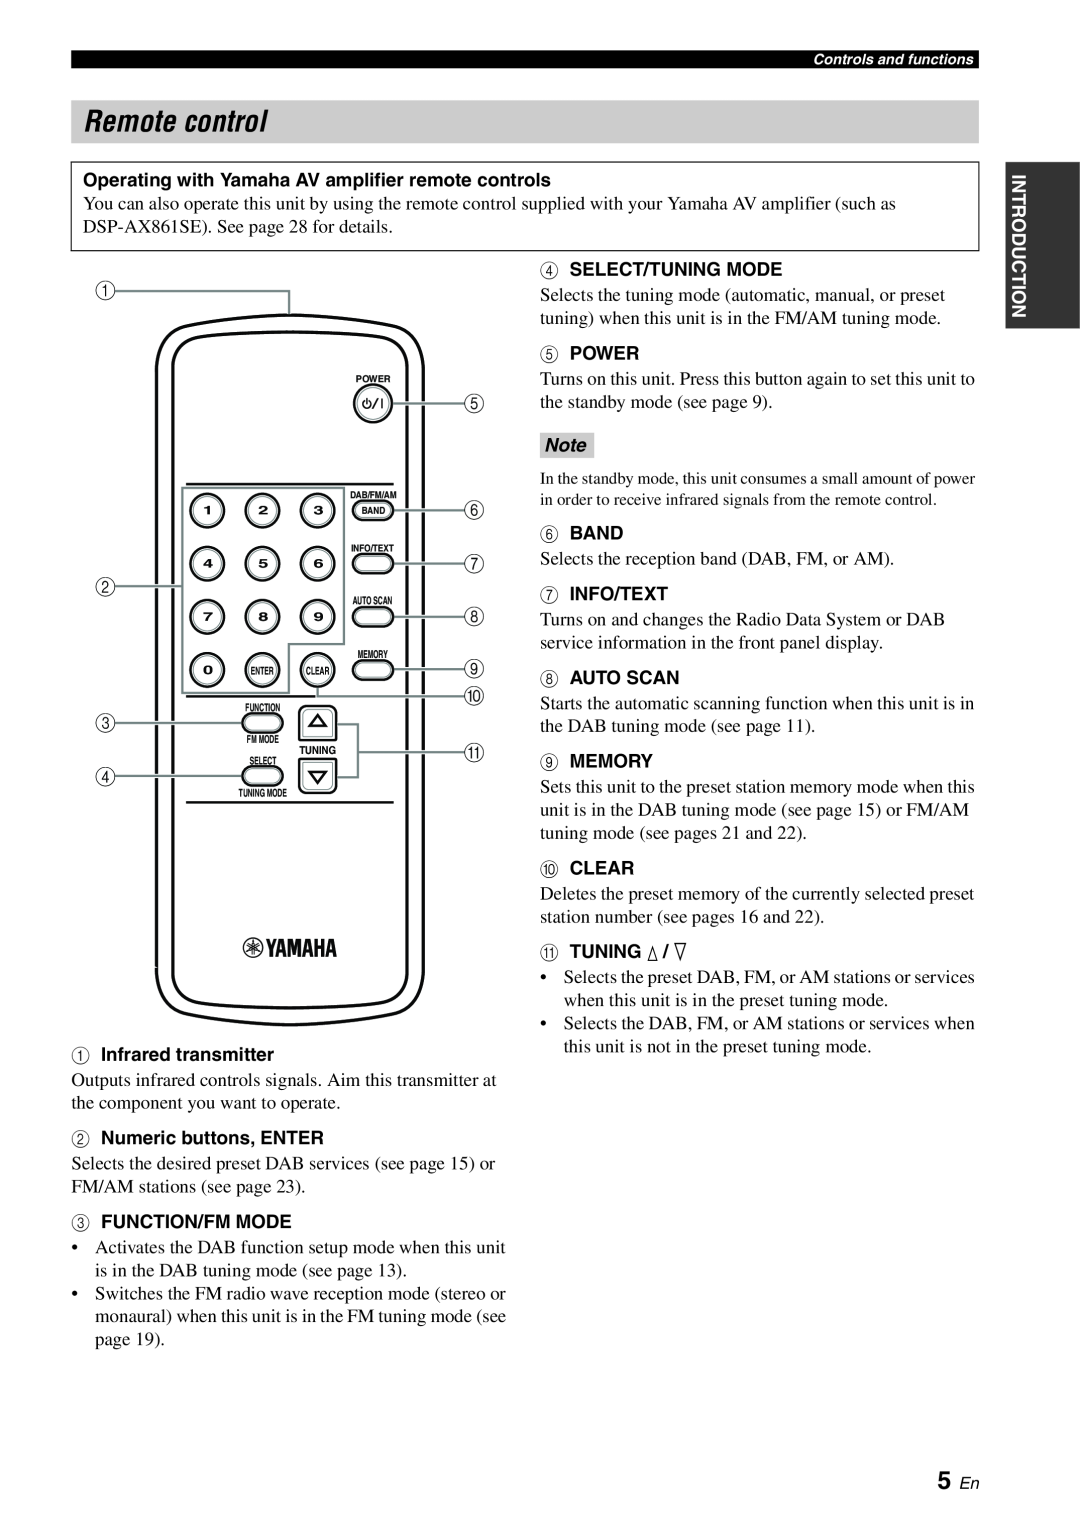 Yamaha TX-761DAB owner manual Remote control, 5 En 